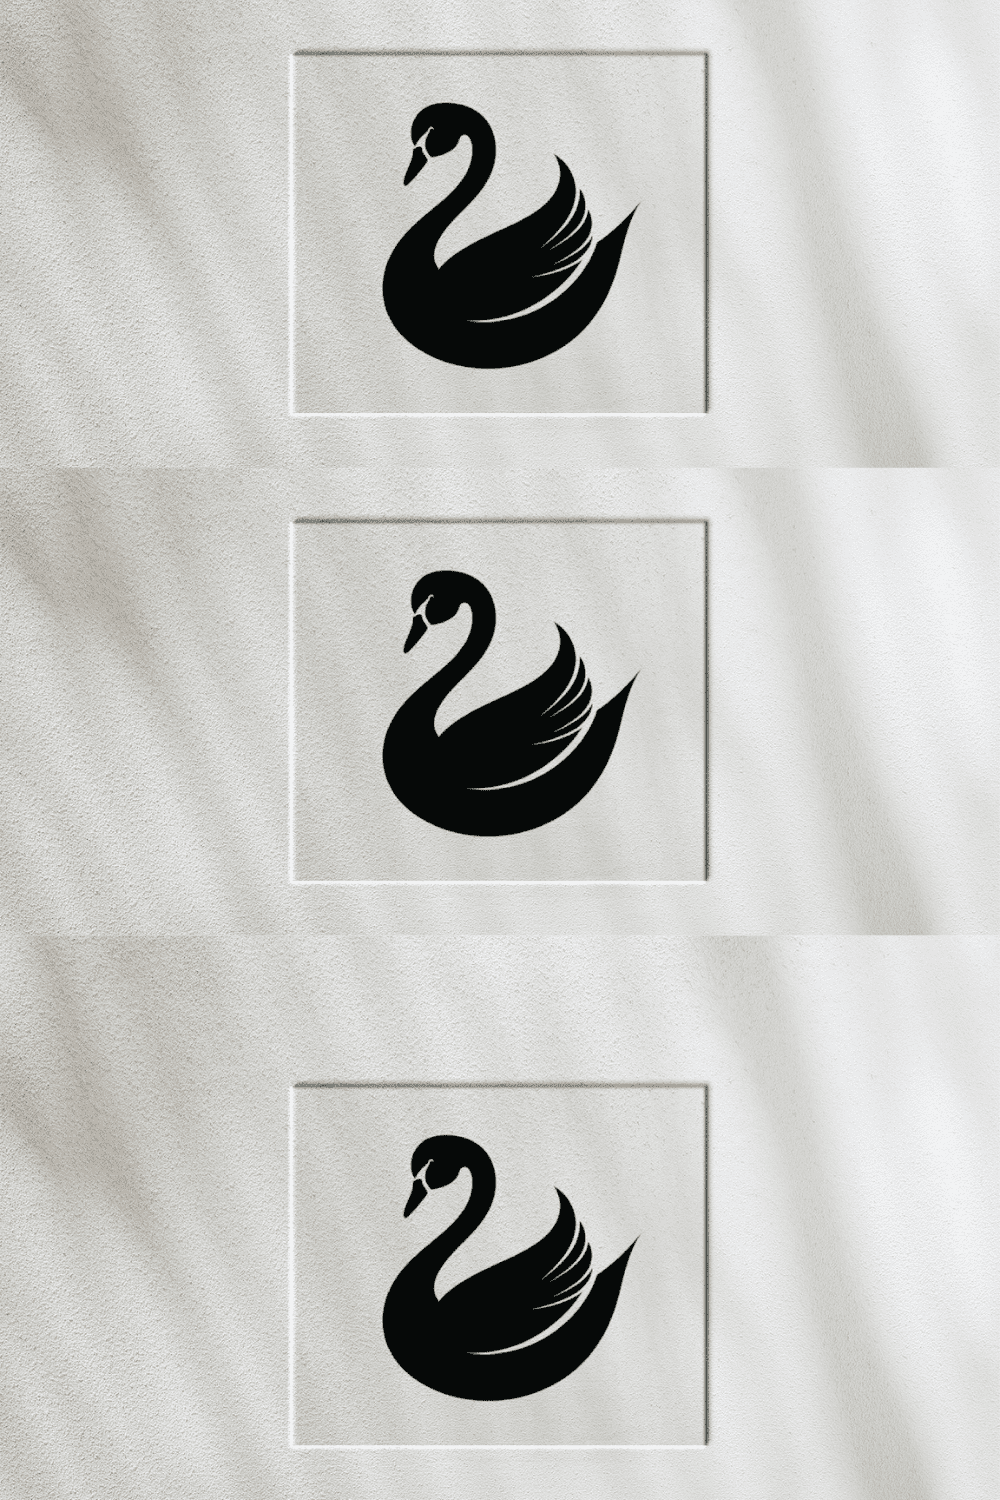 Swan Logo pinterest preview image.